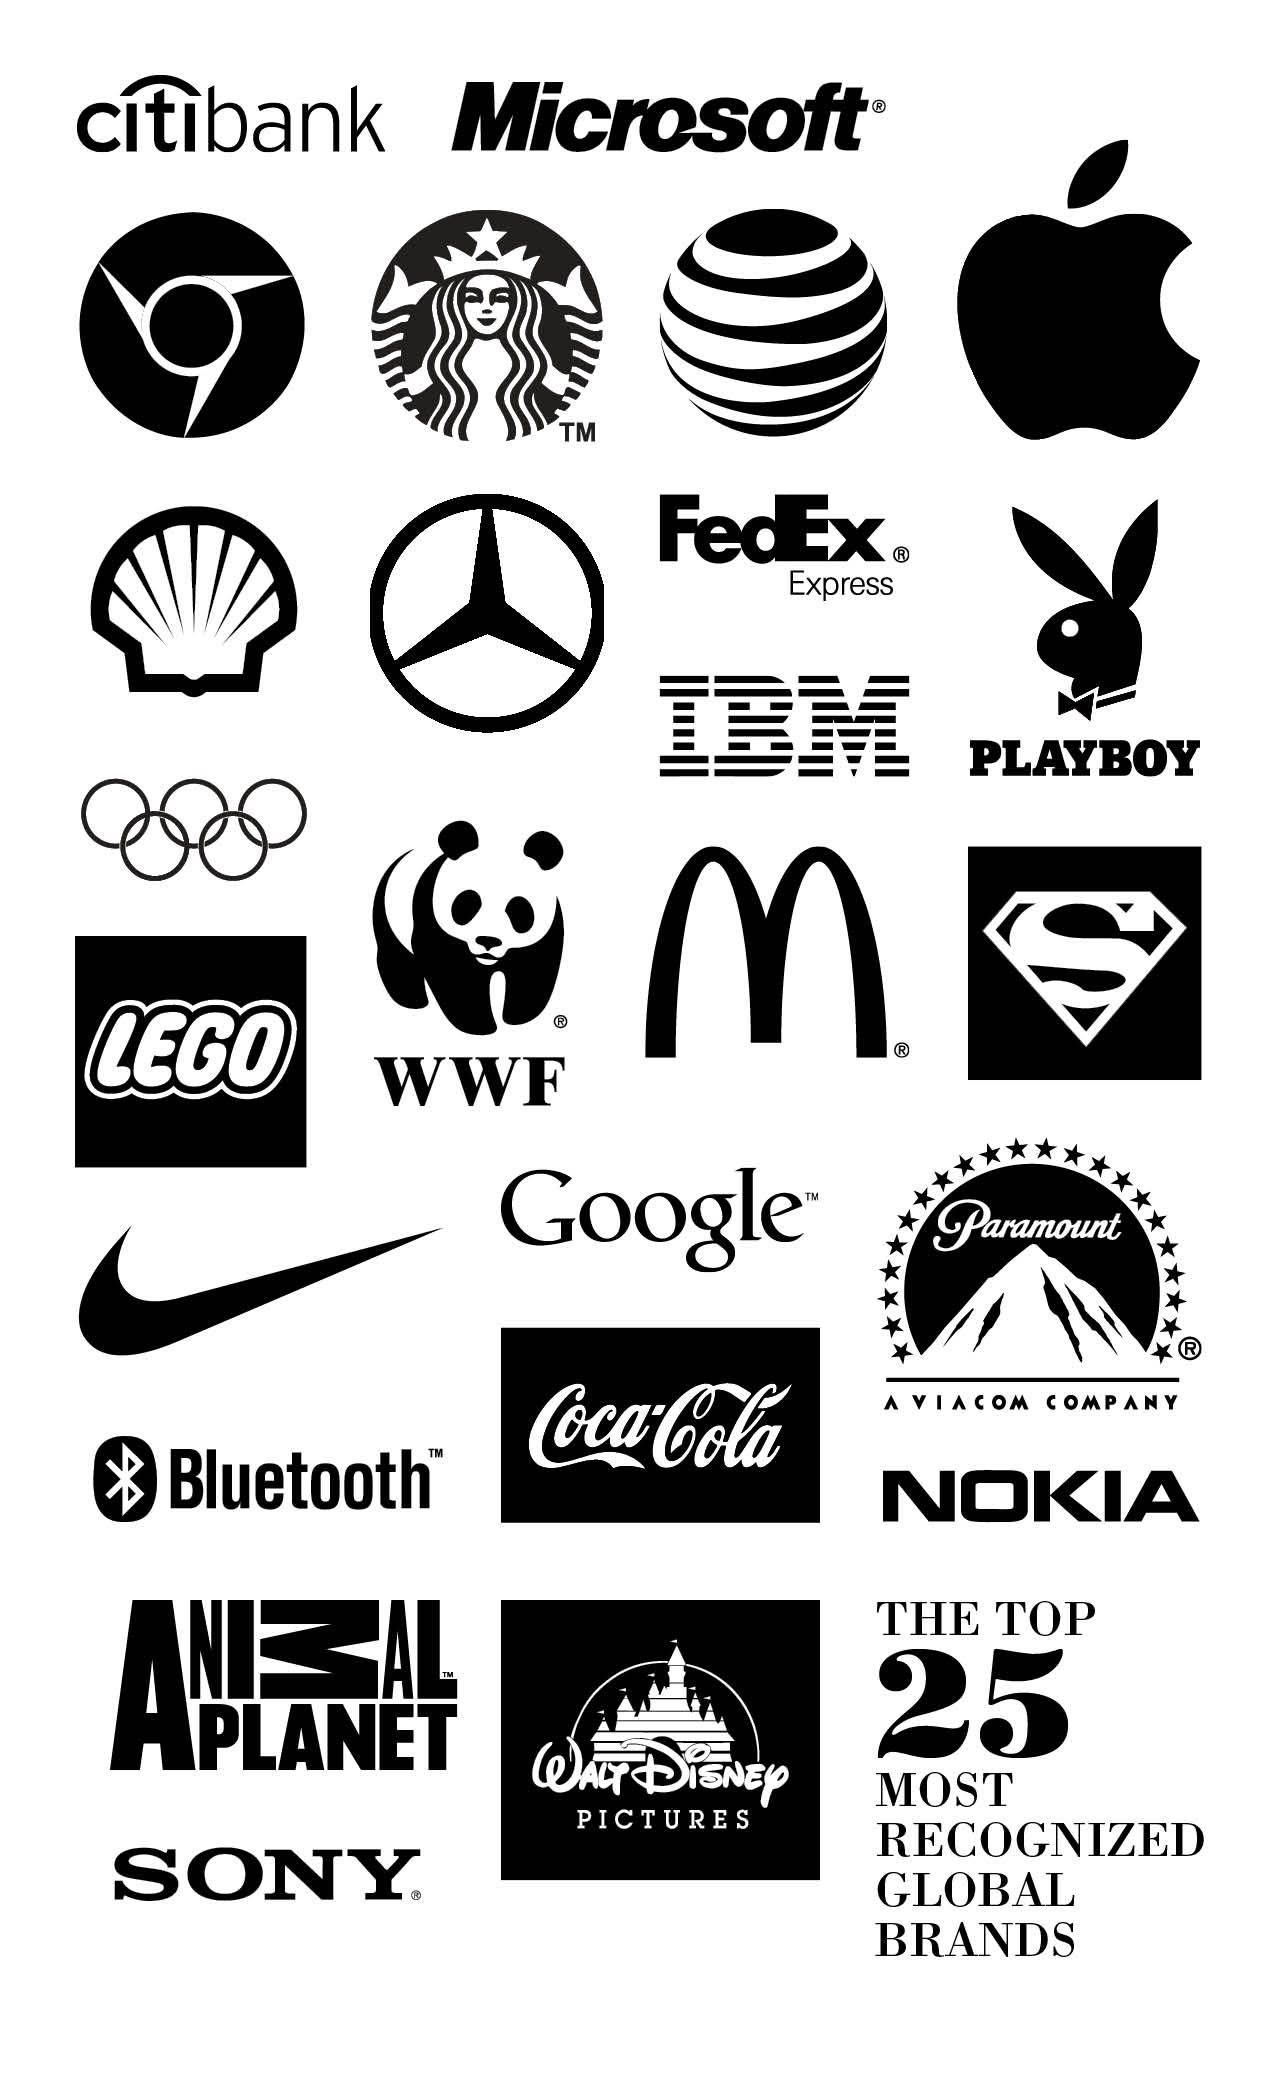 Recognizable Logos